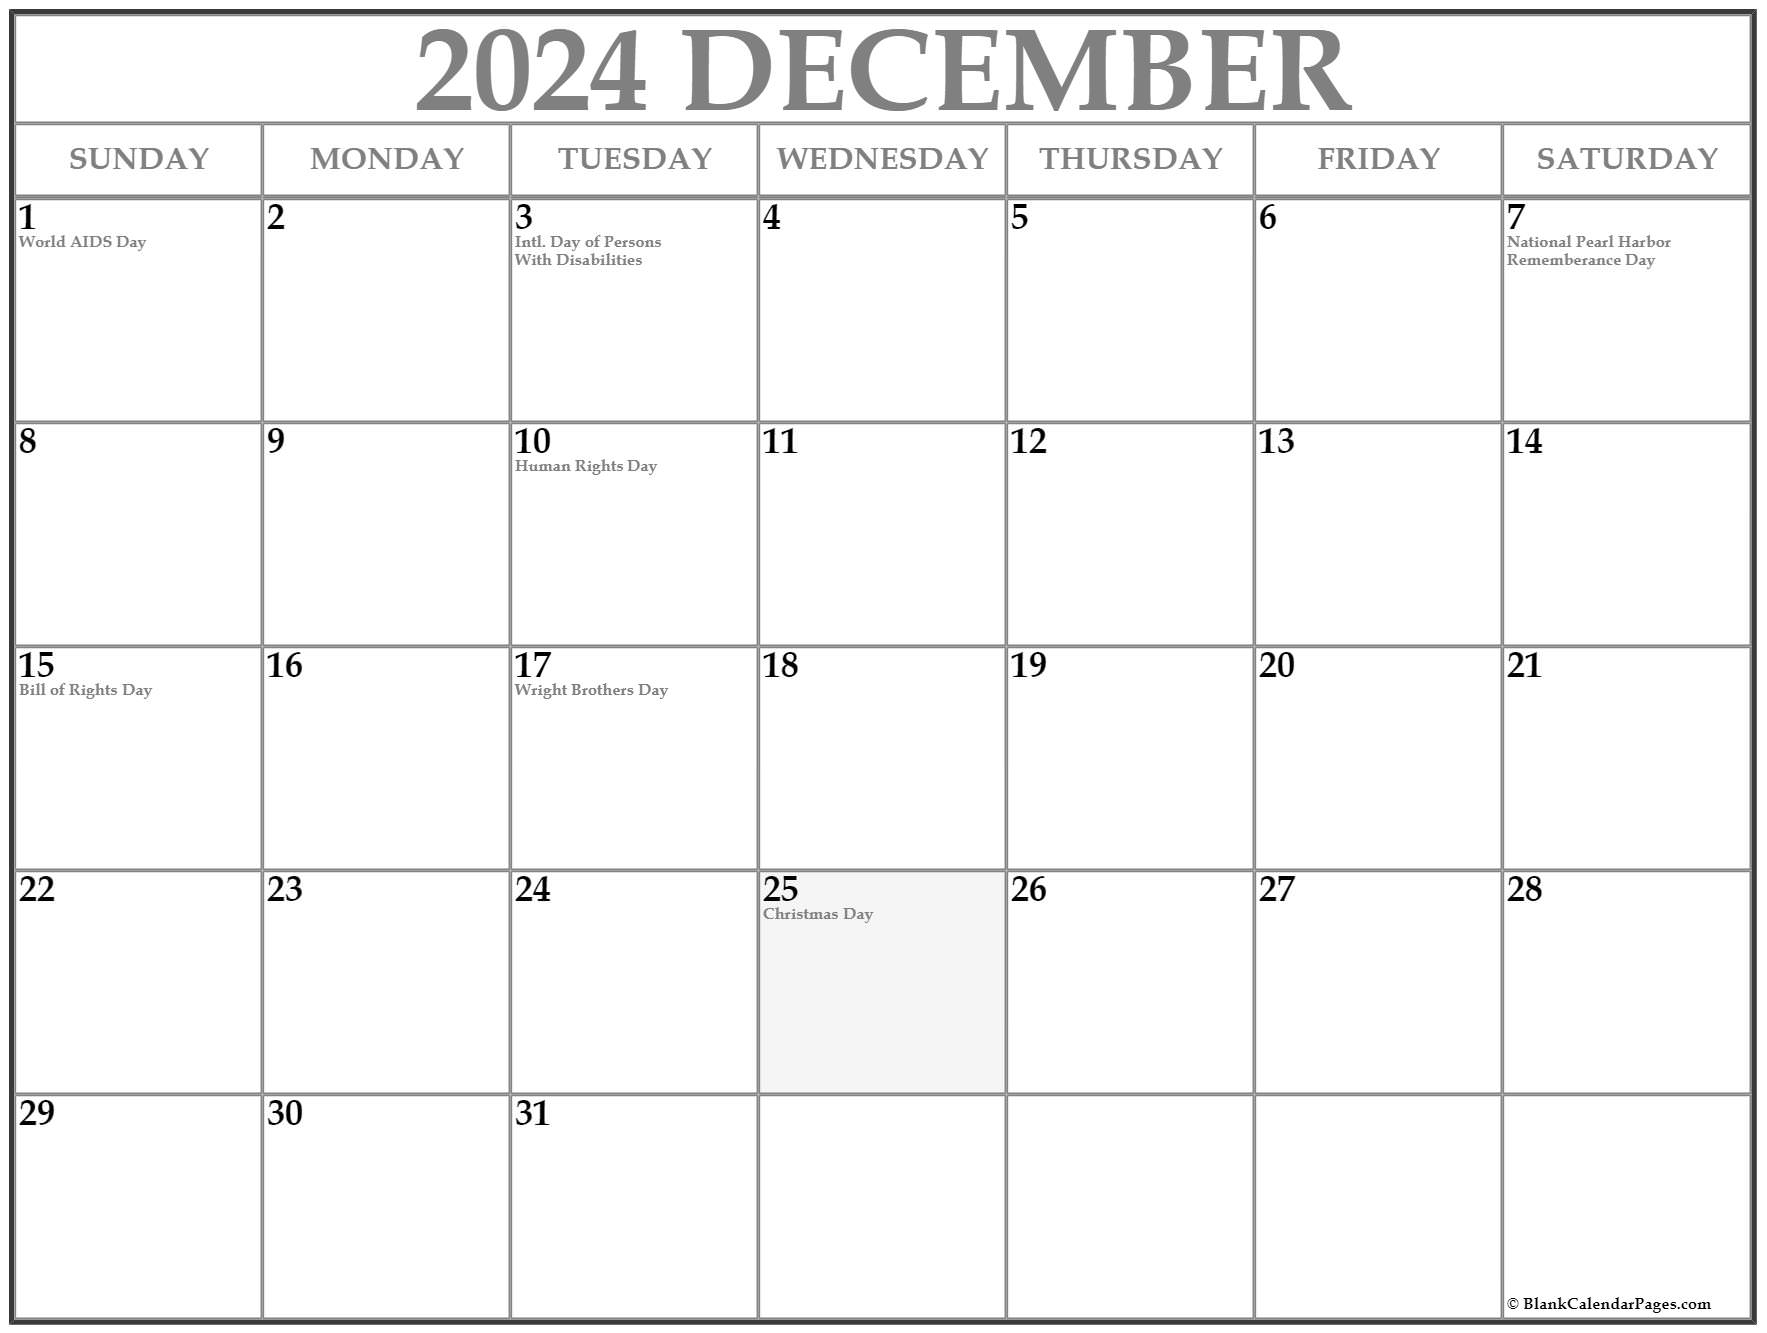 december-2024-calendar-mathrubhumi-cool-latest-incredible-january